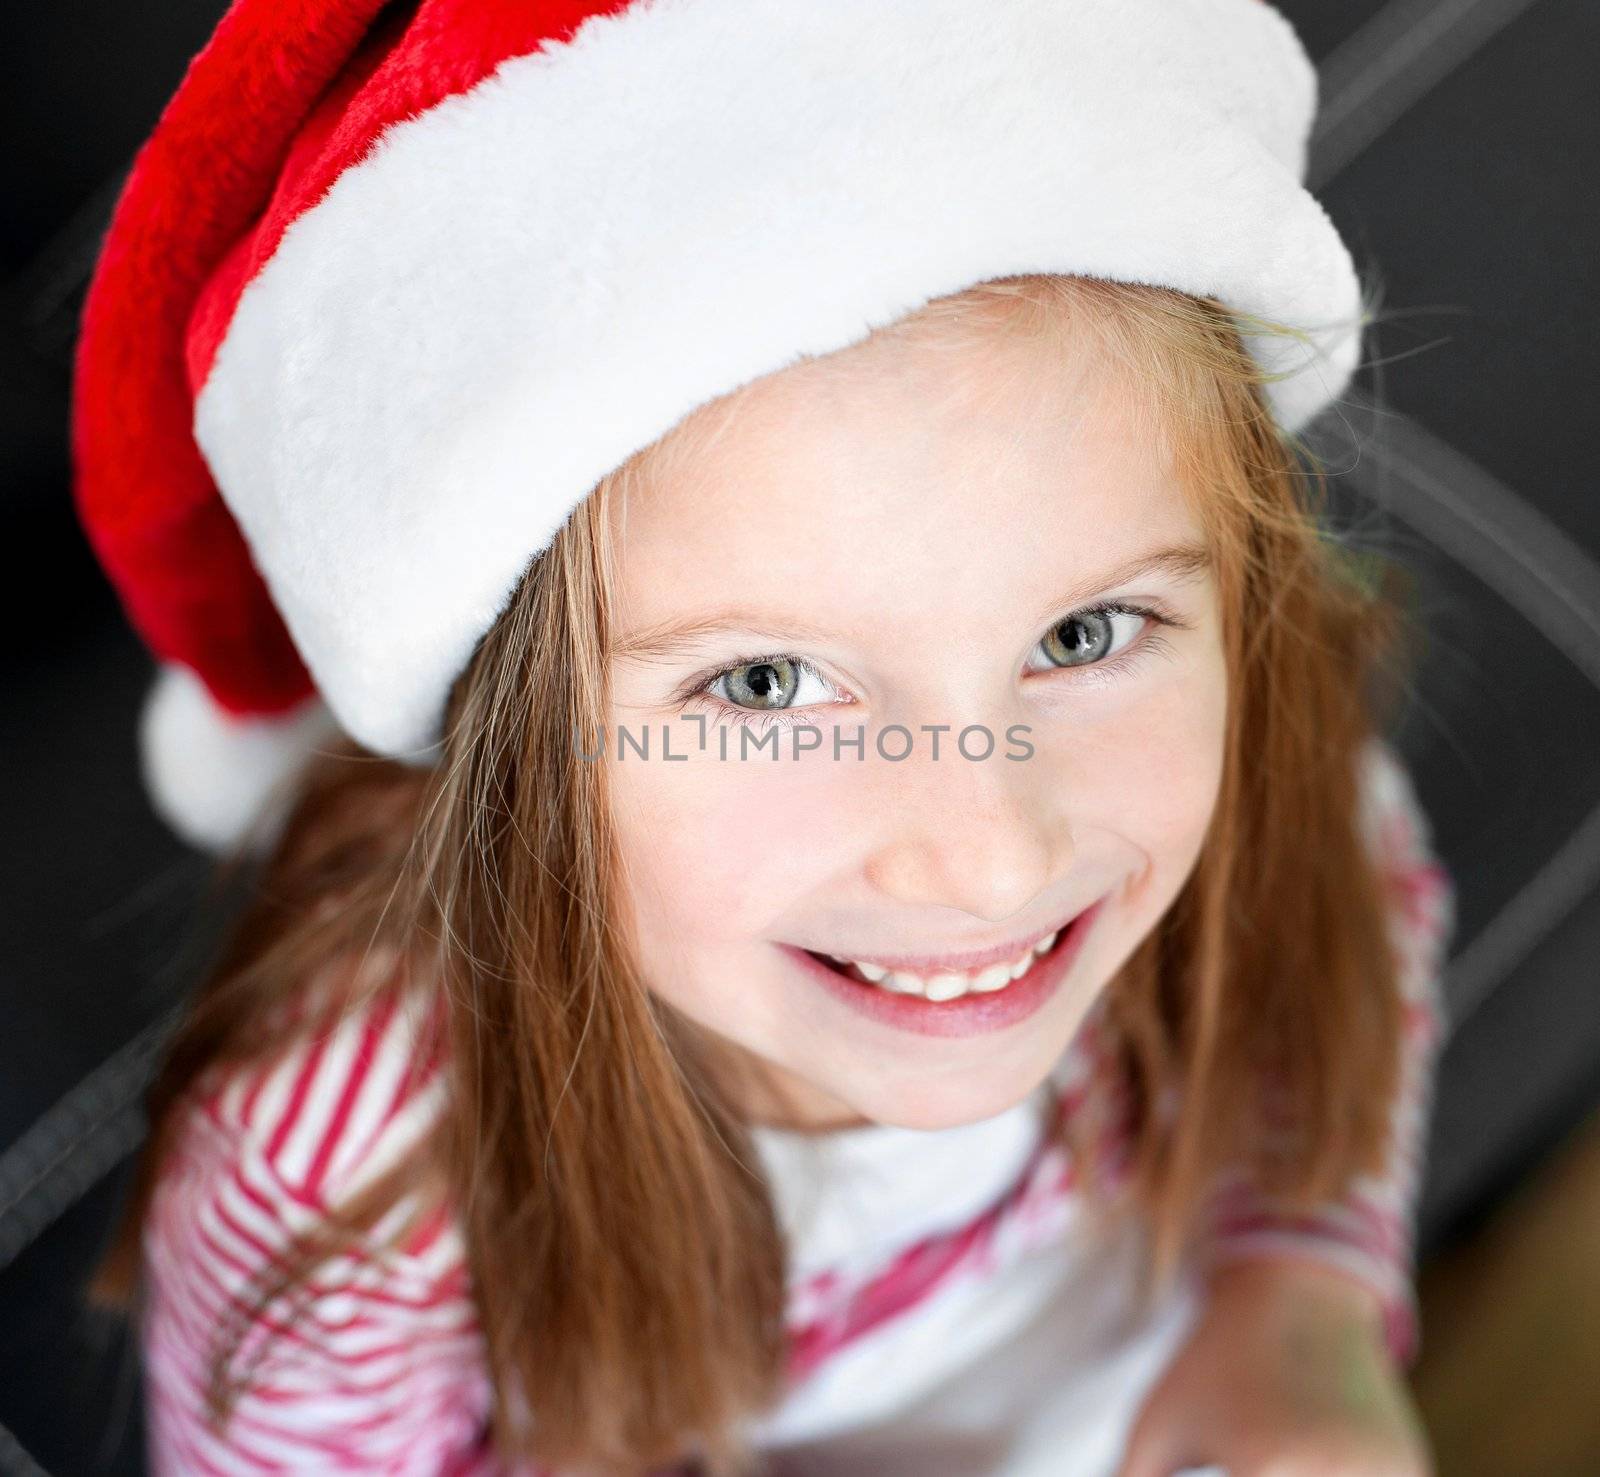 little girl with santa hat by GekaSkr